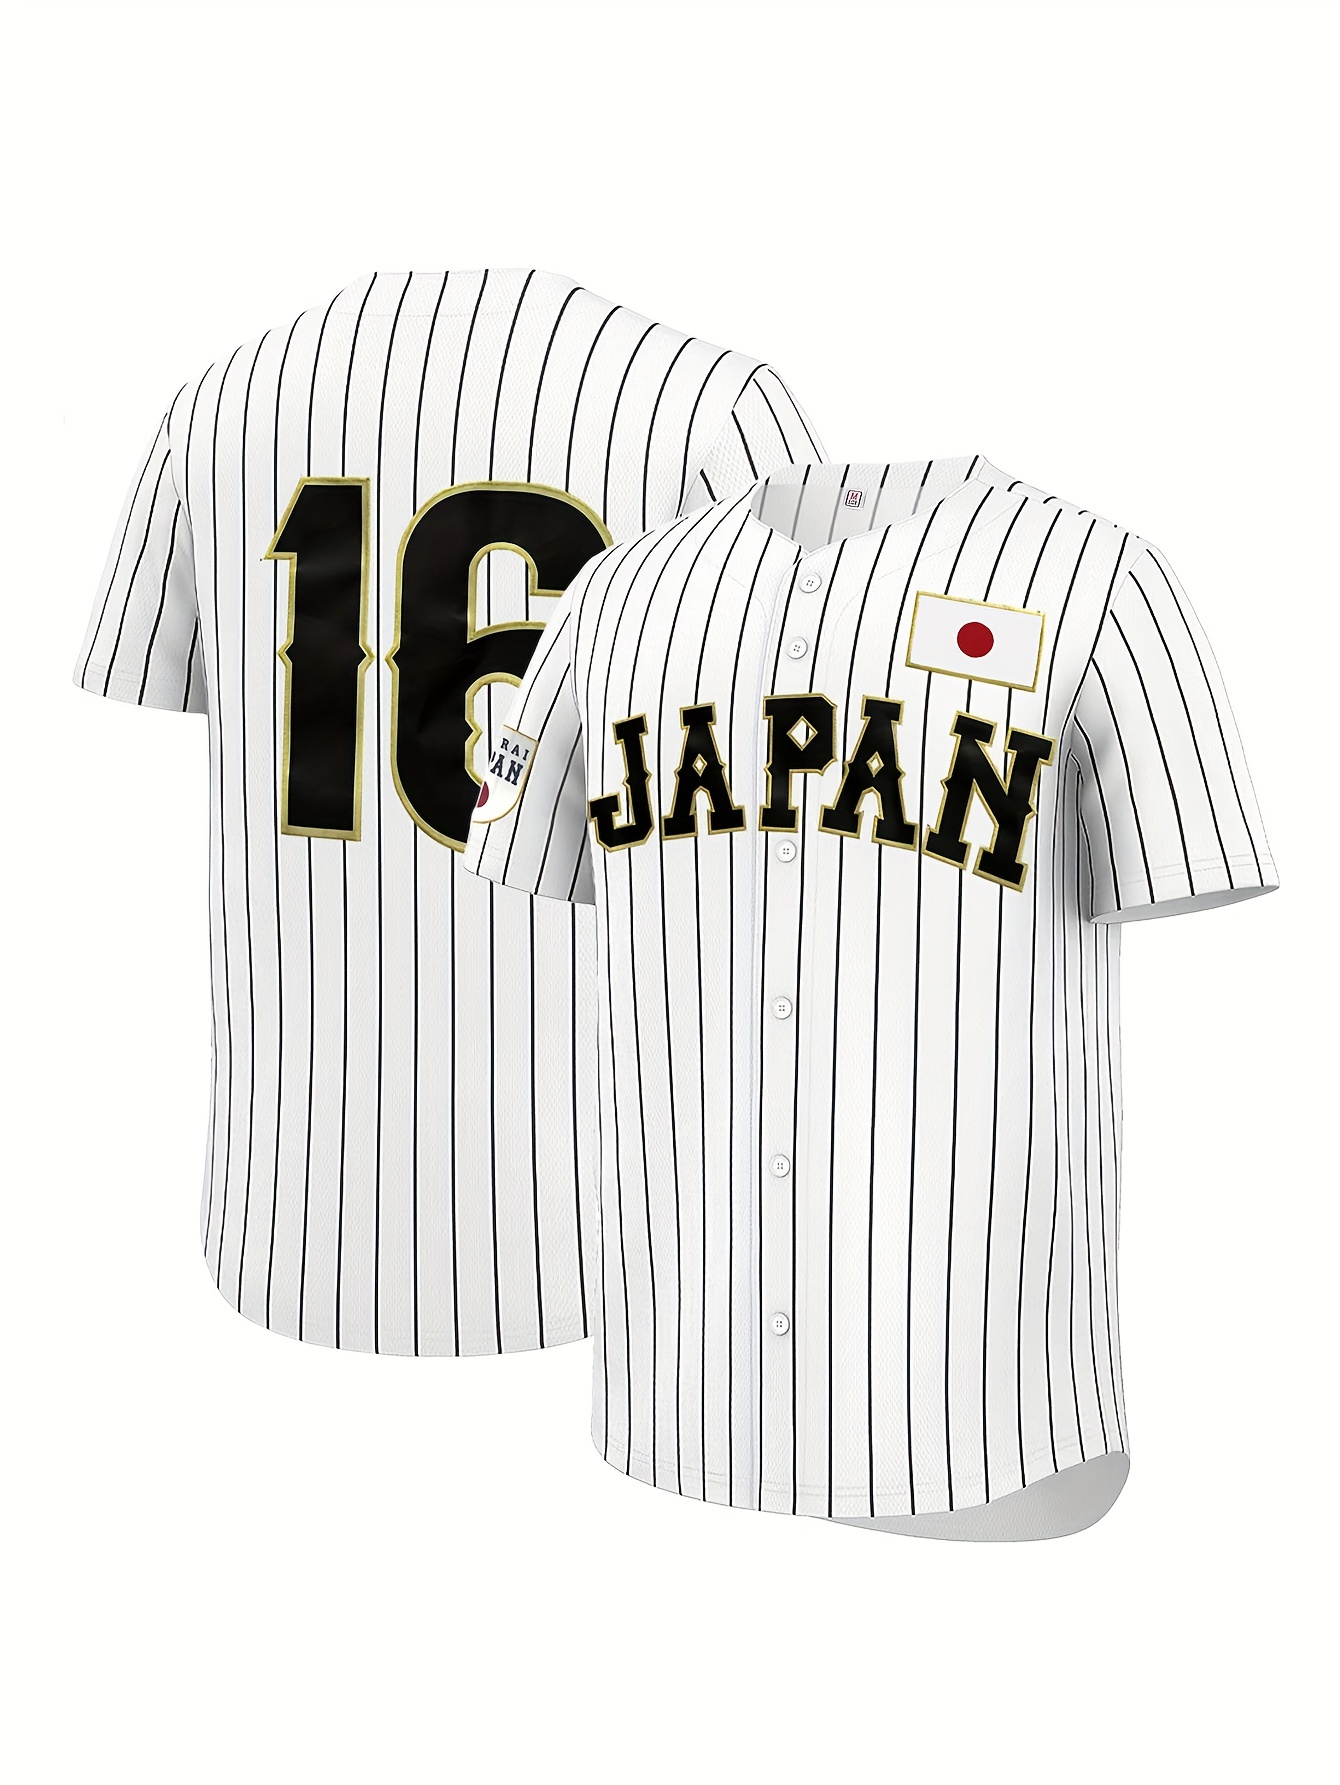  Ohtani #16 Team Japan Baseball Jerseys Sewn Samurai Black Gift  Jerseys (Small) : Sports & Outdoors